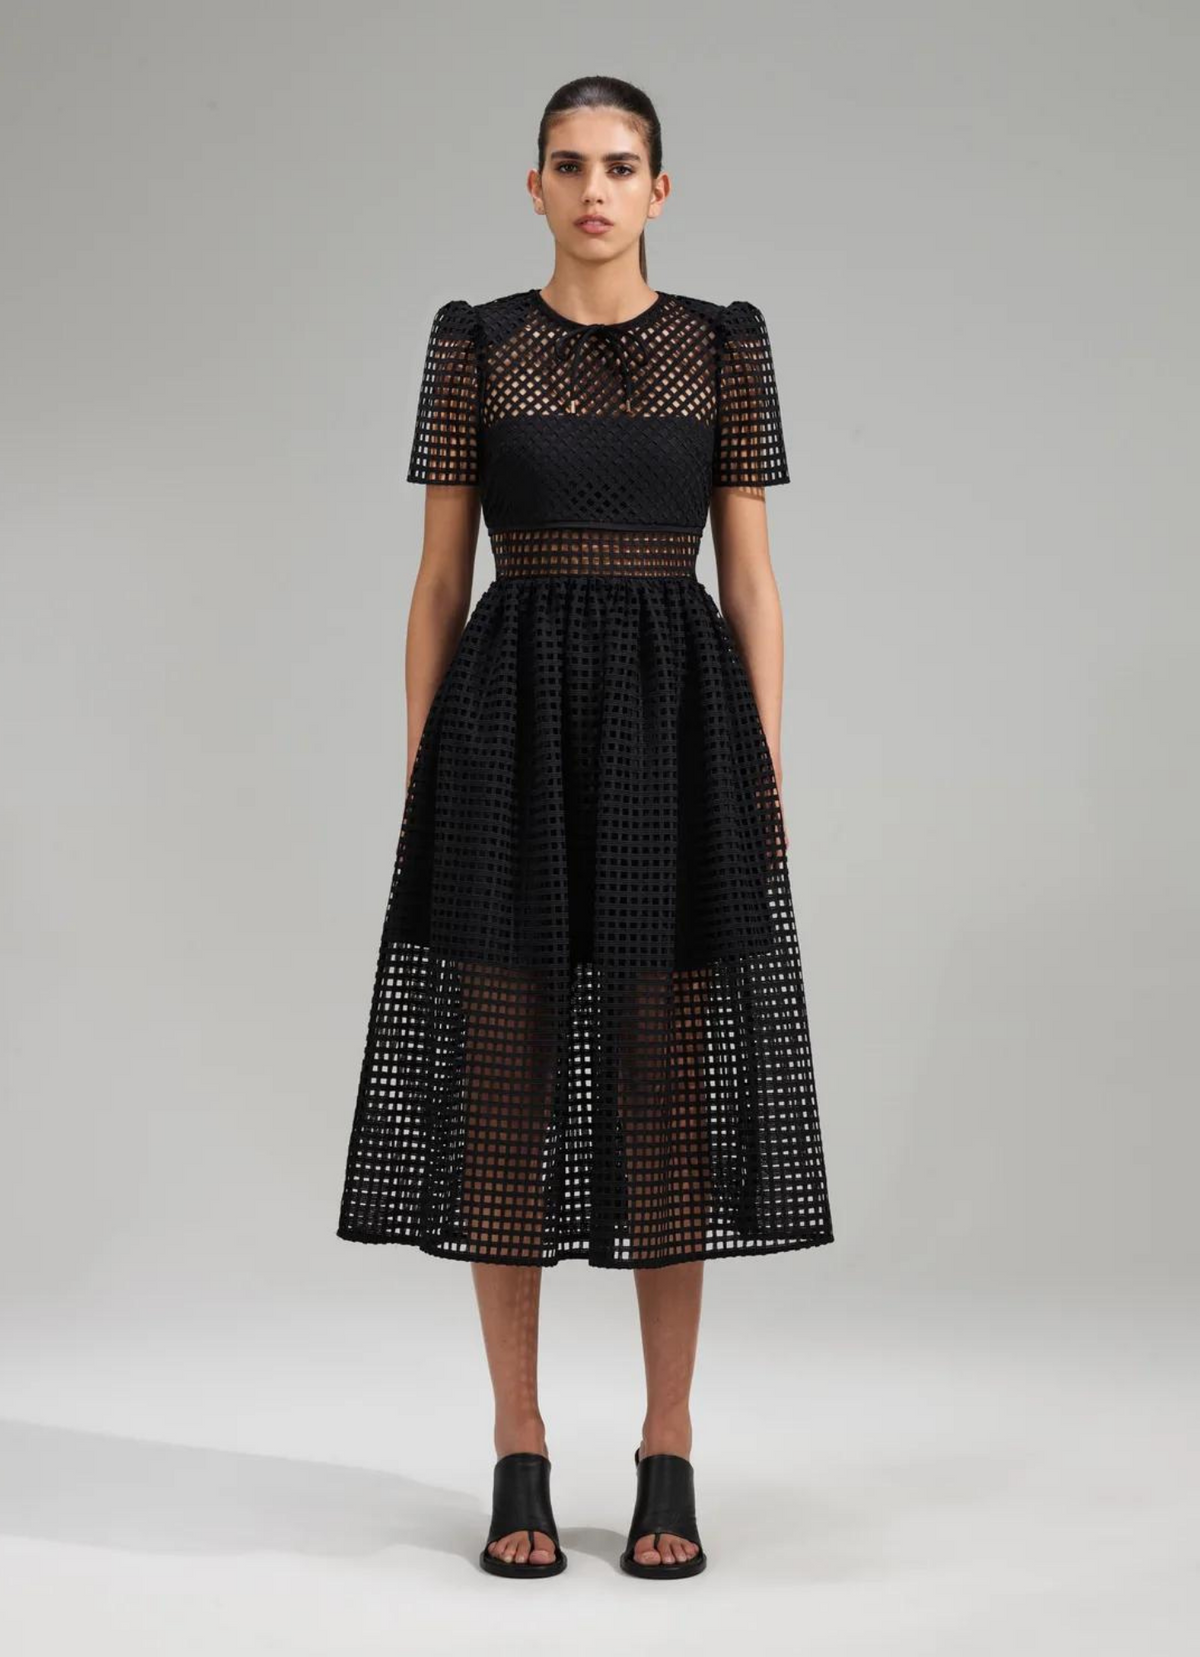 Black dress with mesh detail 